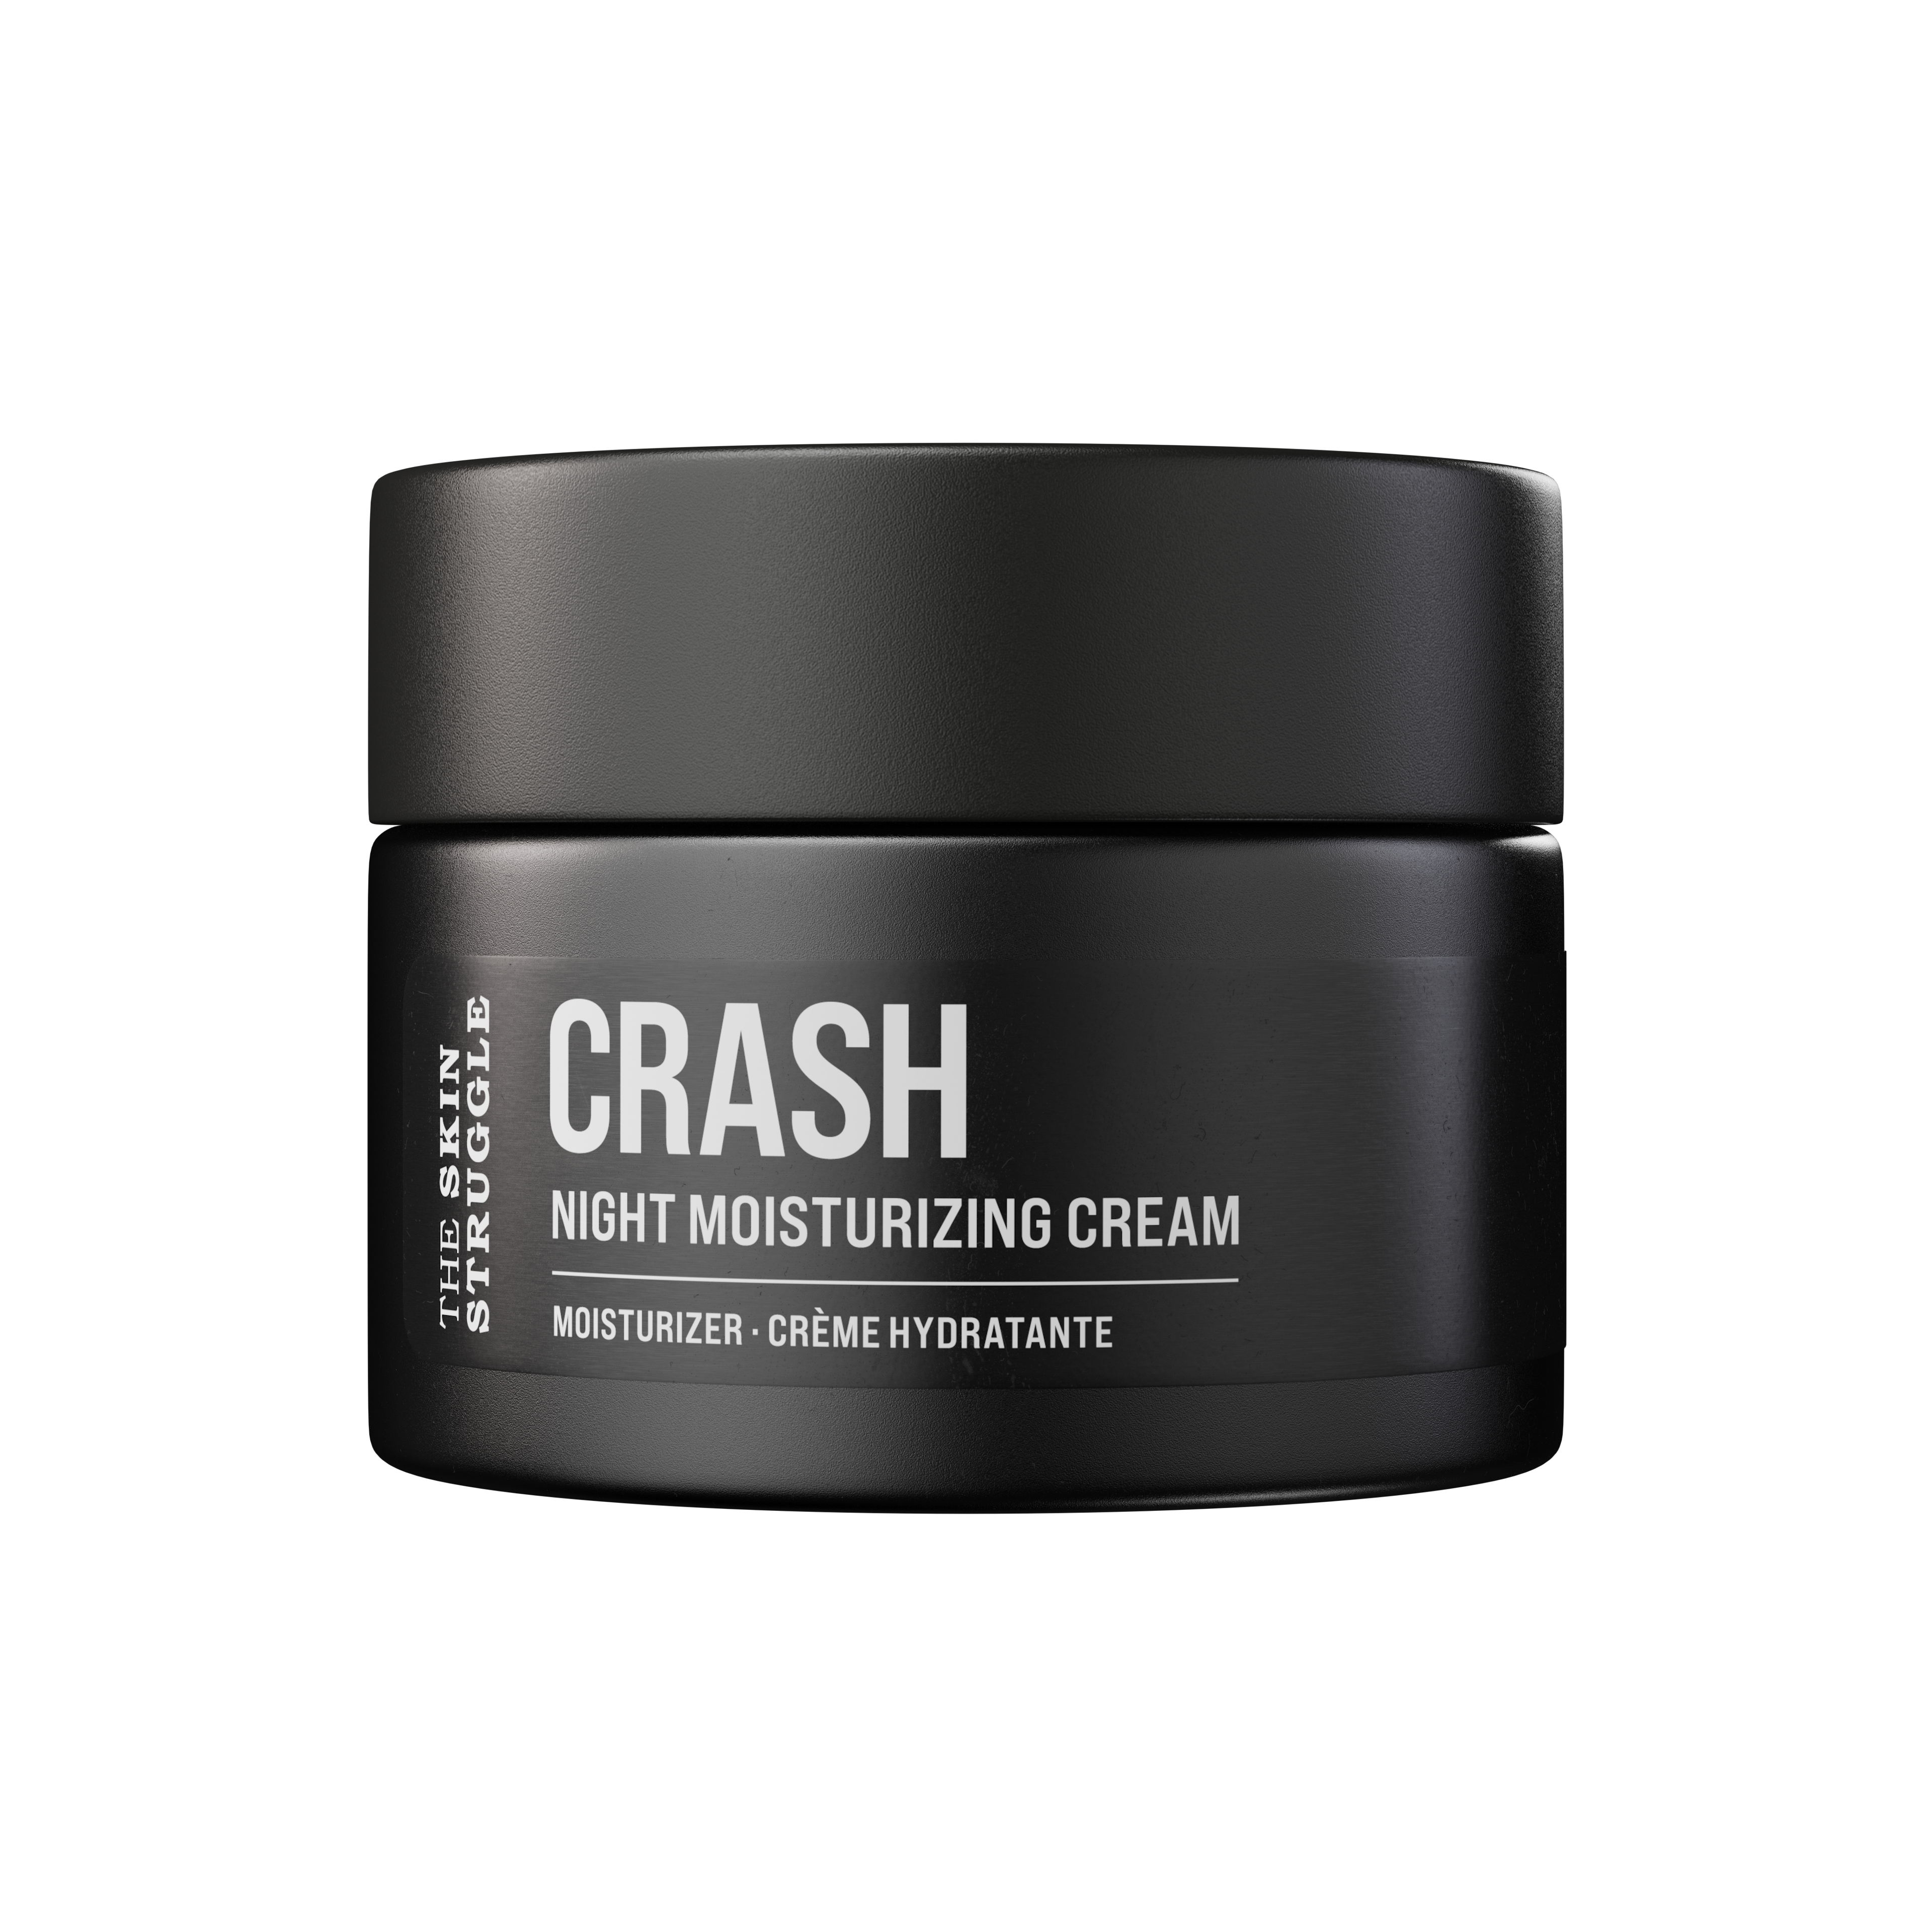 The Beard Struggle Crash Night Moisturizing Cream